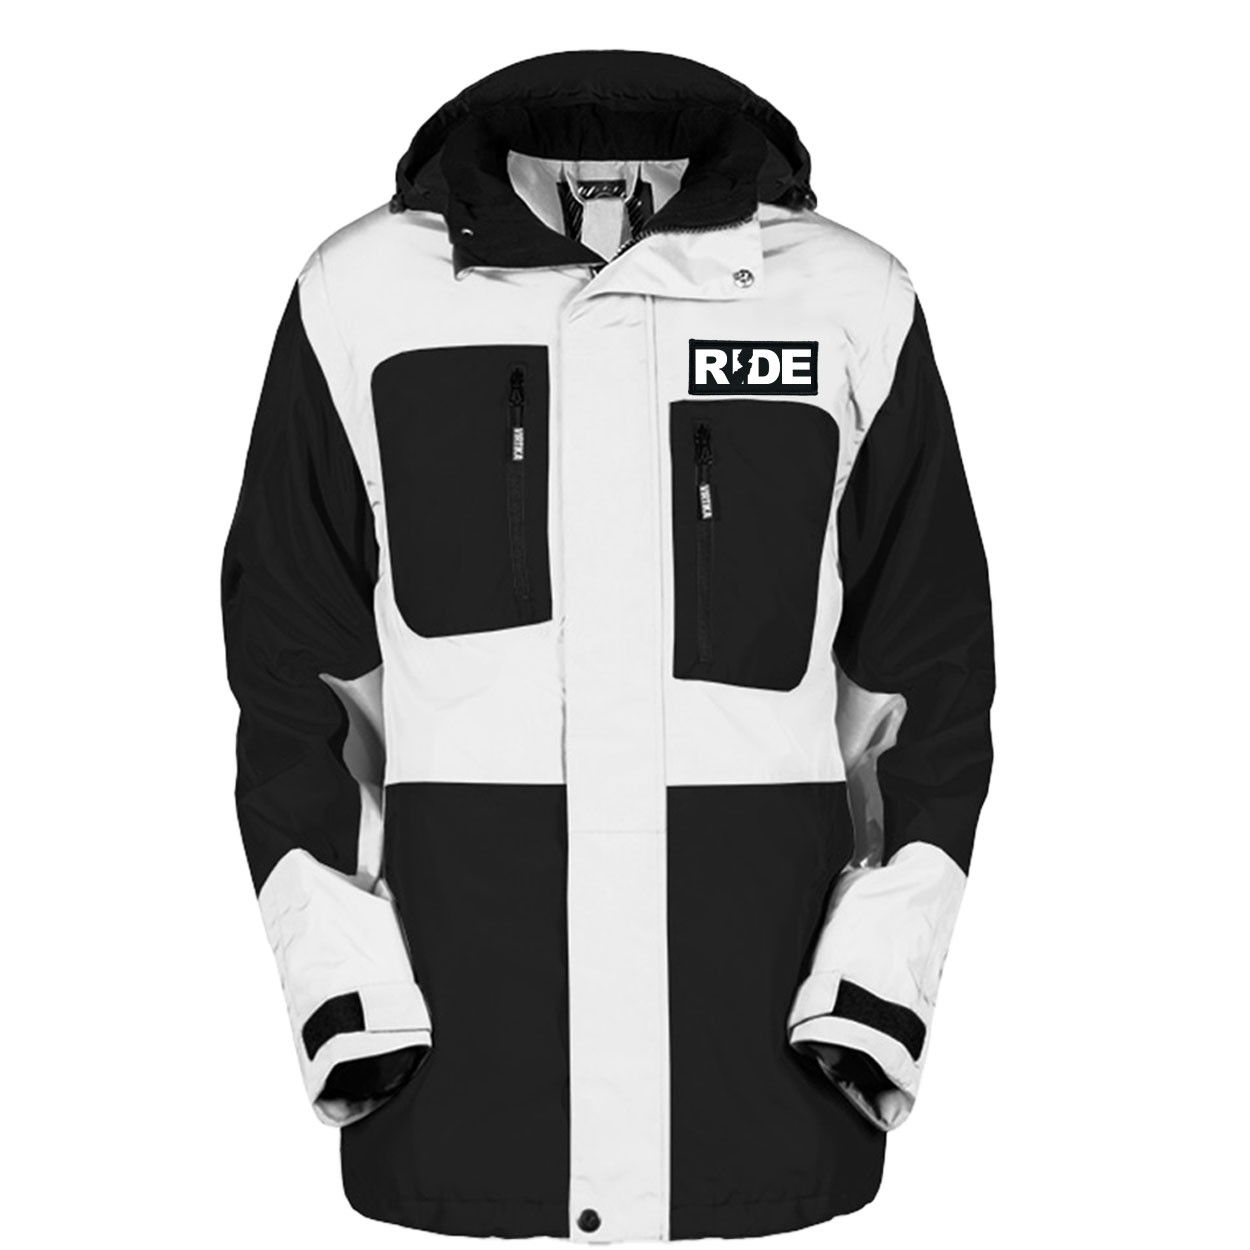 Ride New Jersey Pro Waterproof Breathable Winter Virtika Jacket Black/White (White Logo)